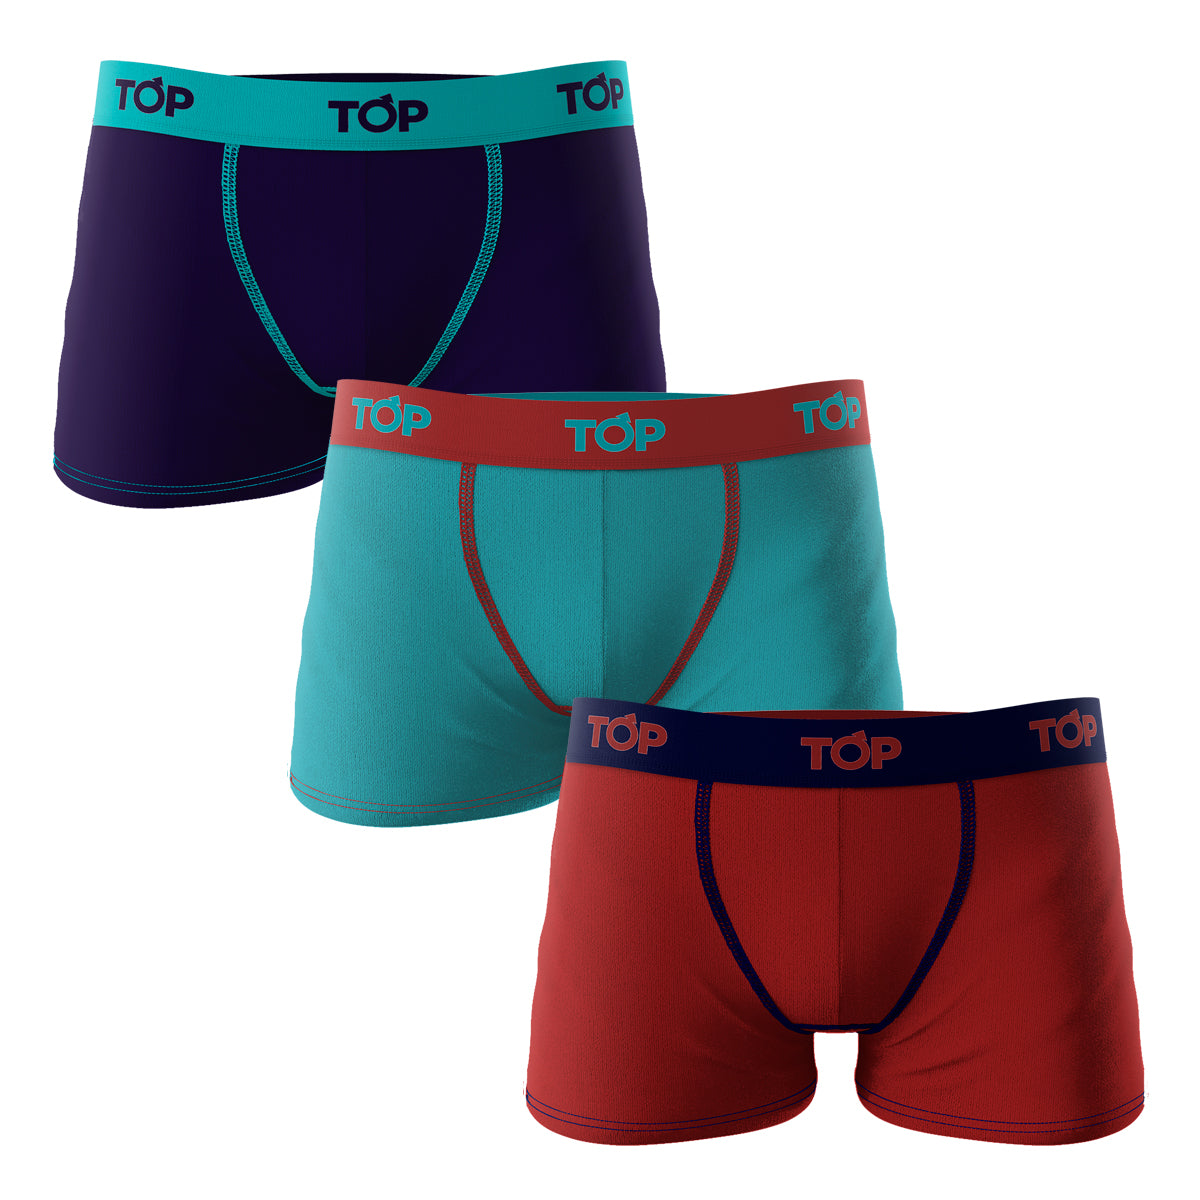 Calza Deportiva Primera Capa Microfibra Niño - Top Underwear